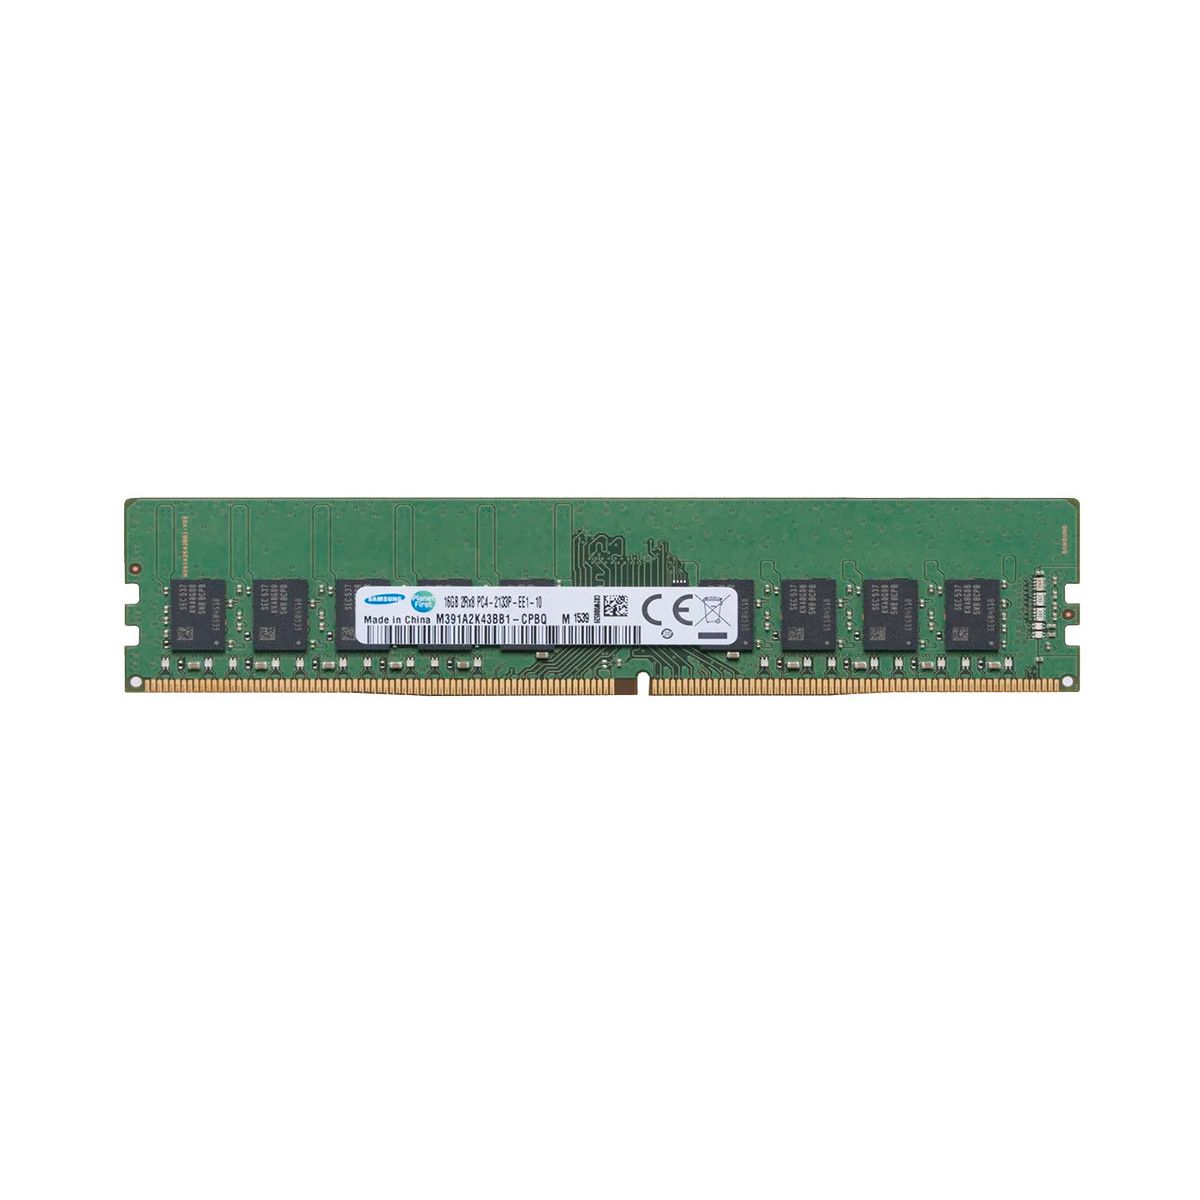 46W0816-MS -NO- Memstar 1x 16GB DDR4-2133 ECC UDIMM PC4-17000P-E